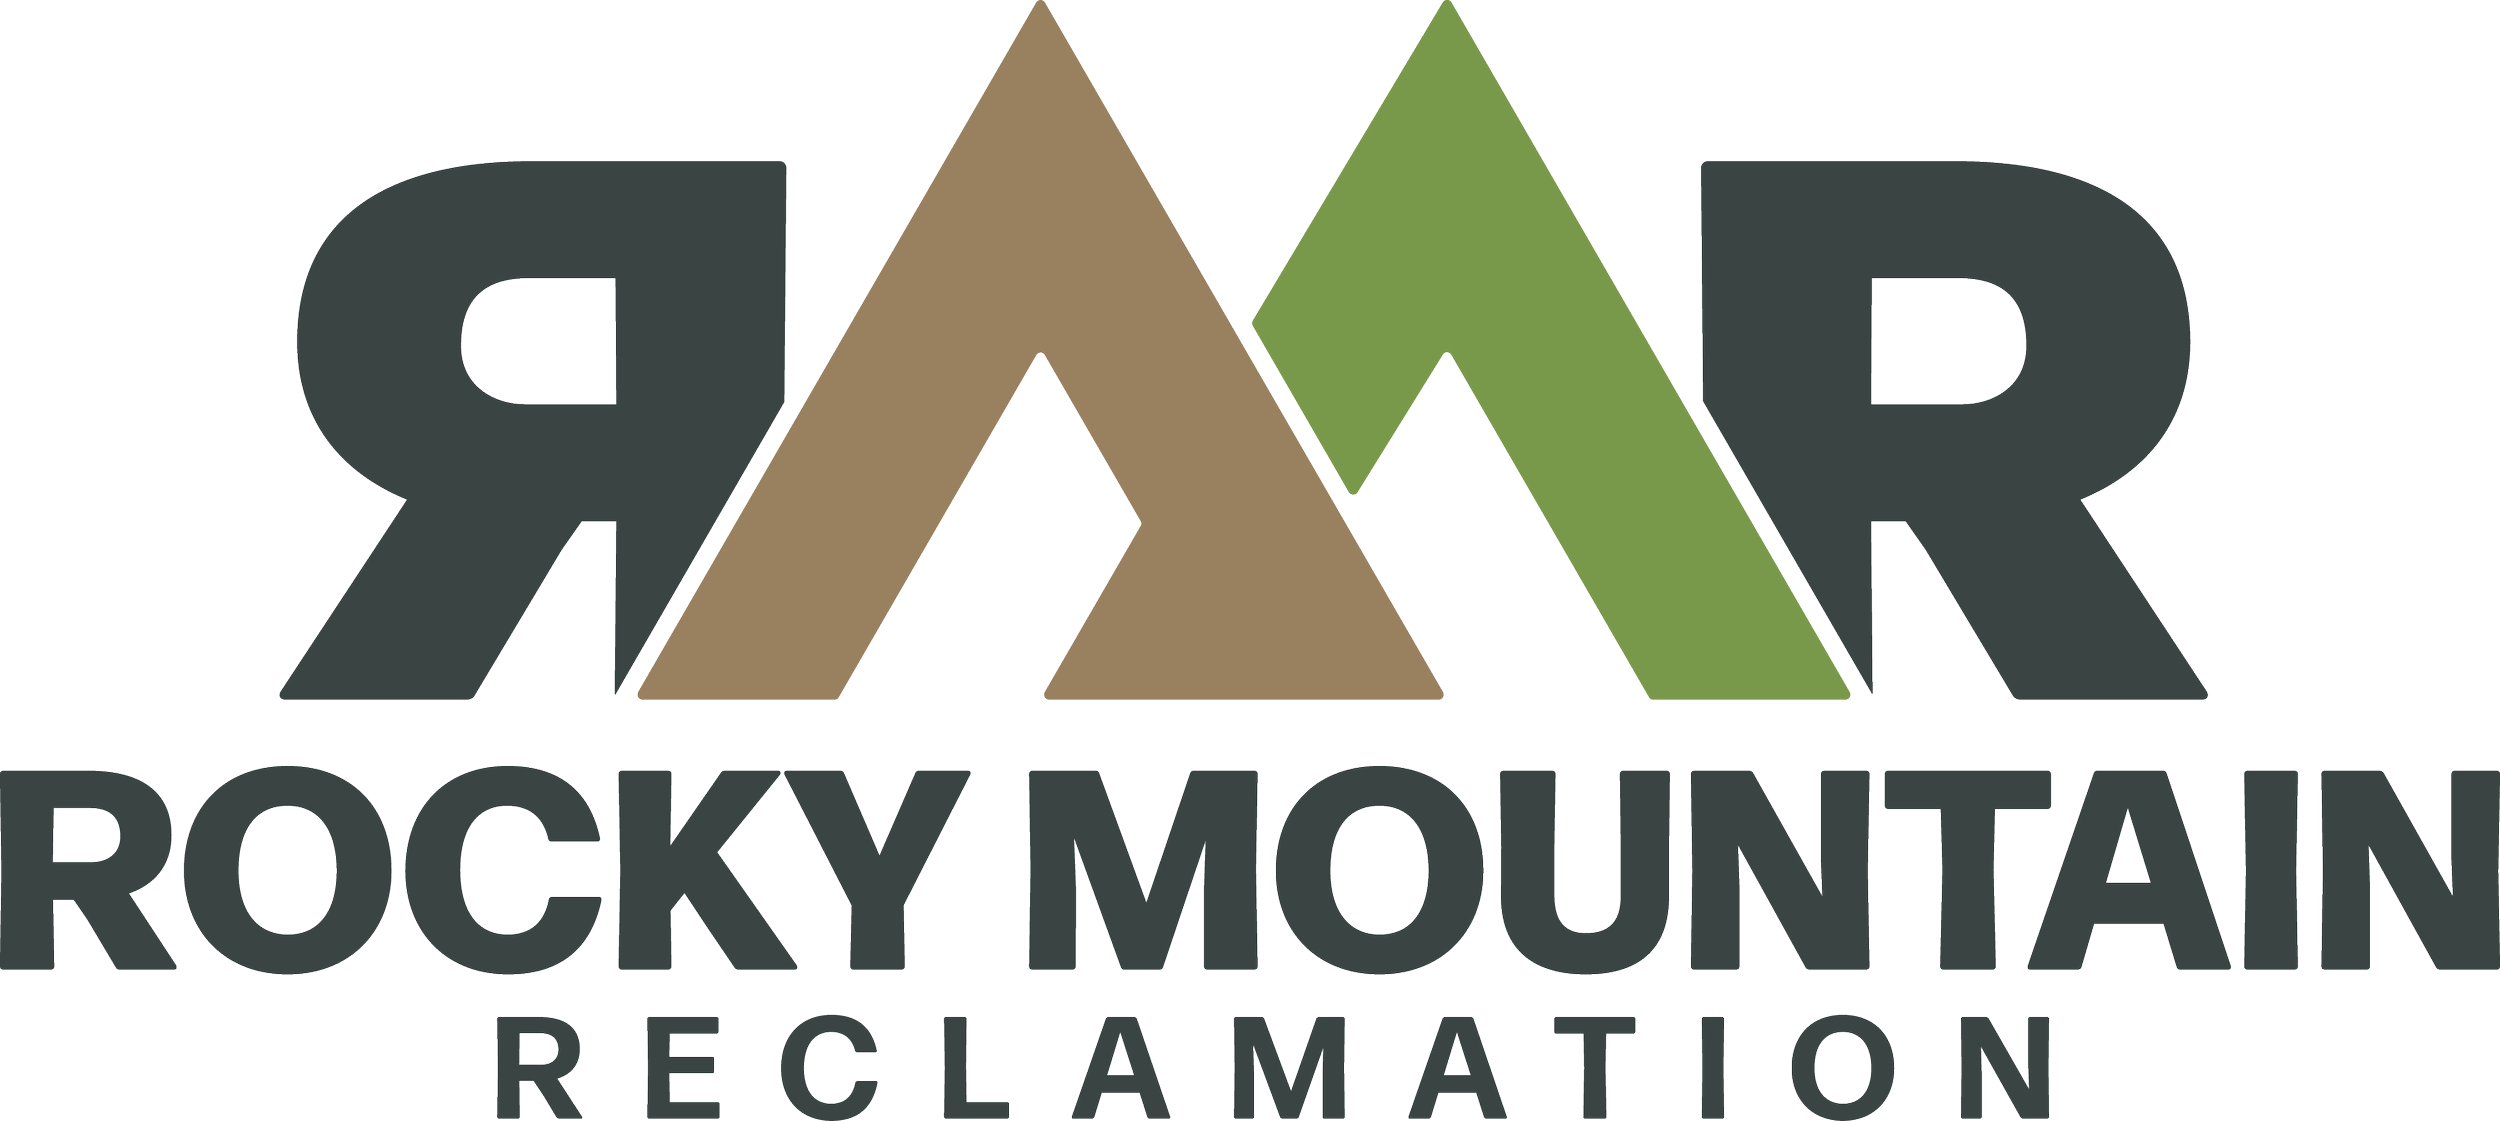 Rocky Mountain Reclamation